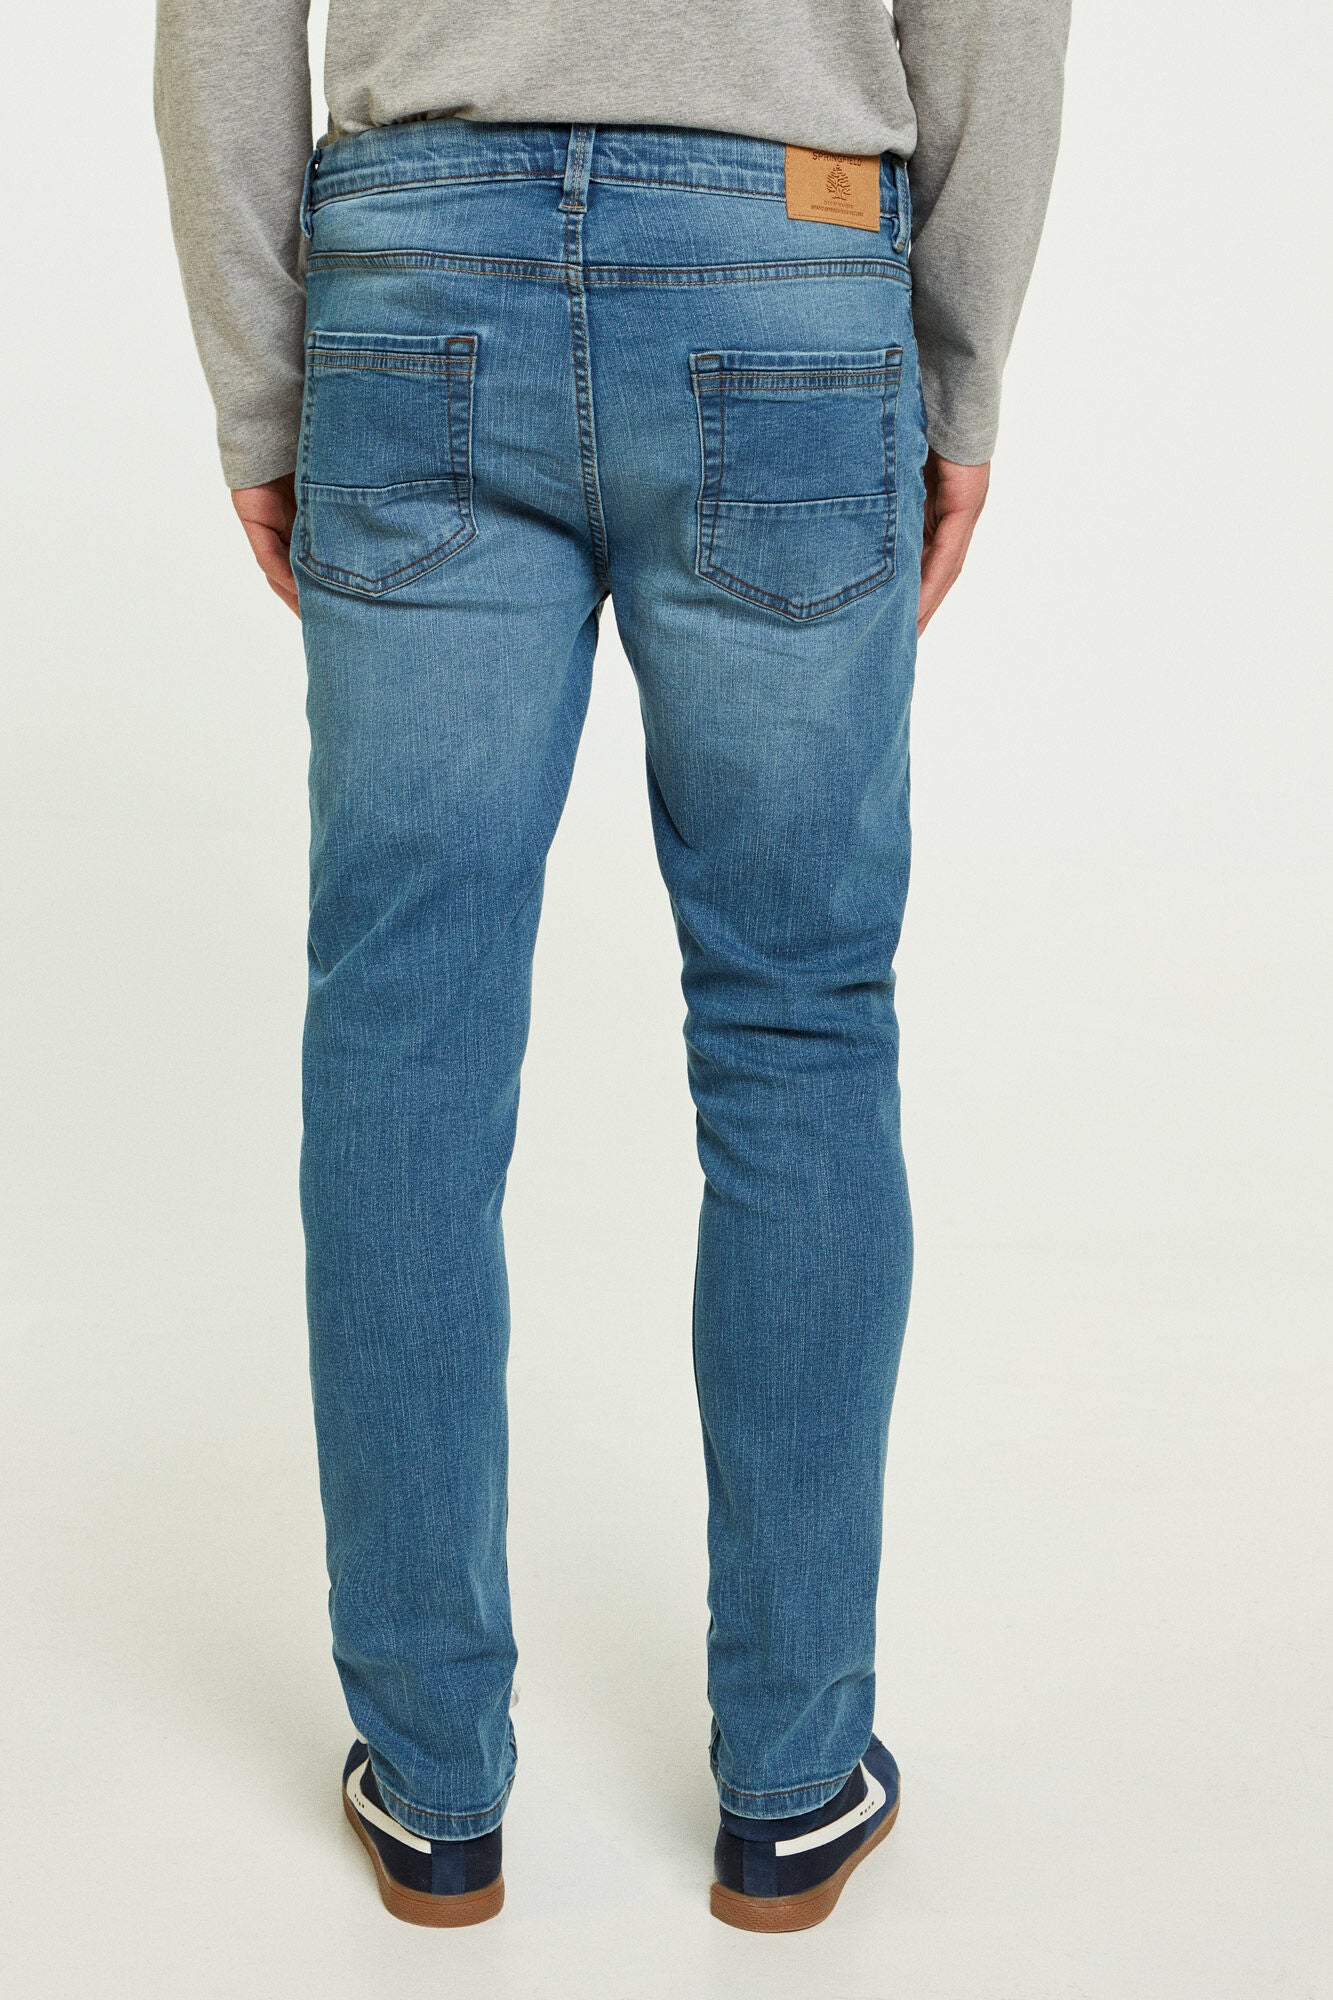 Medium wash slim fit lightweight jeans